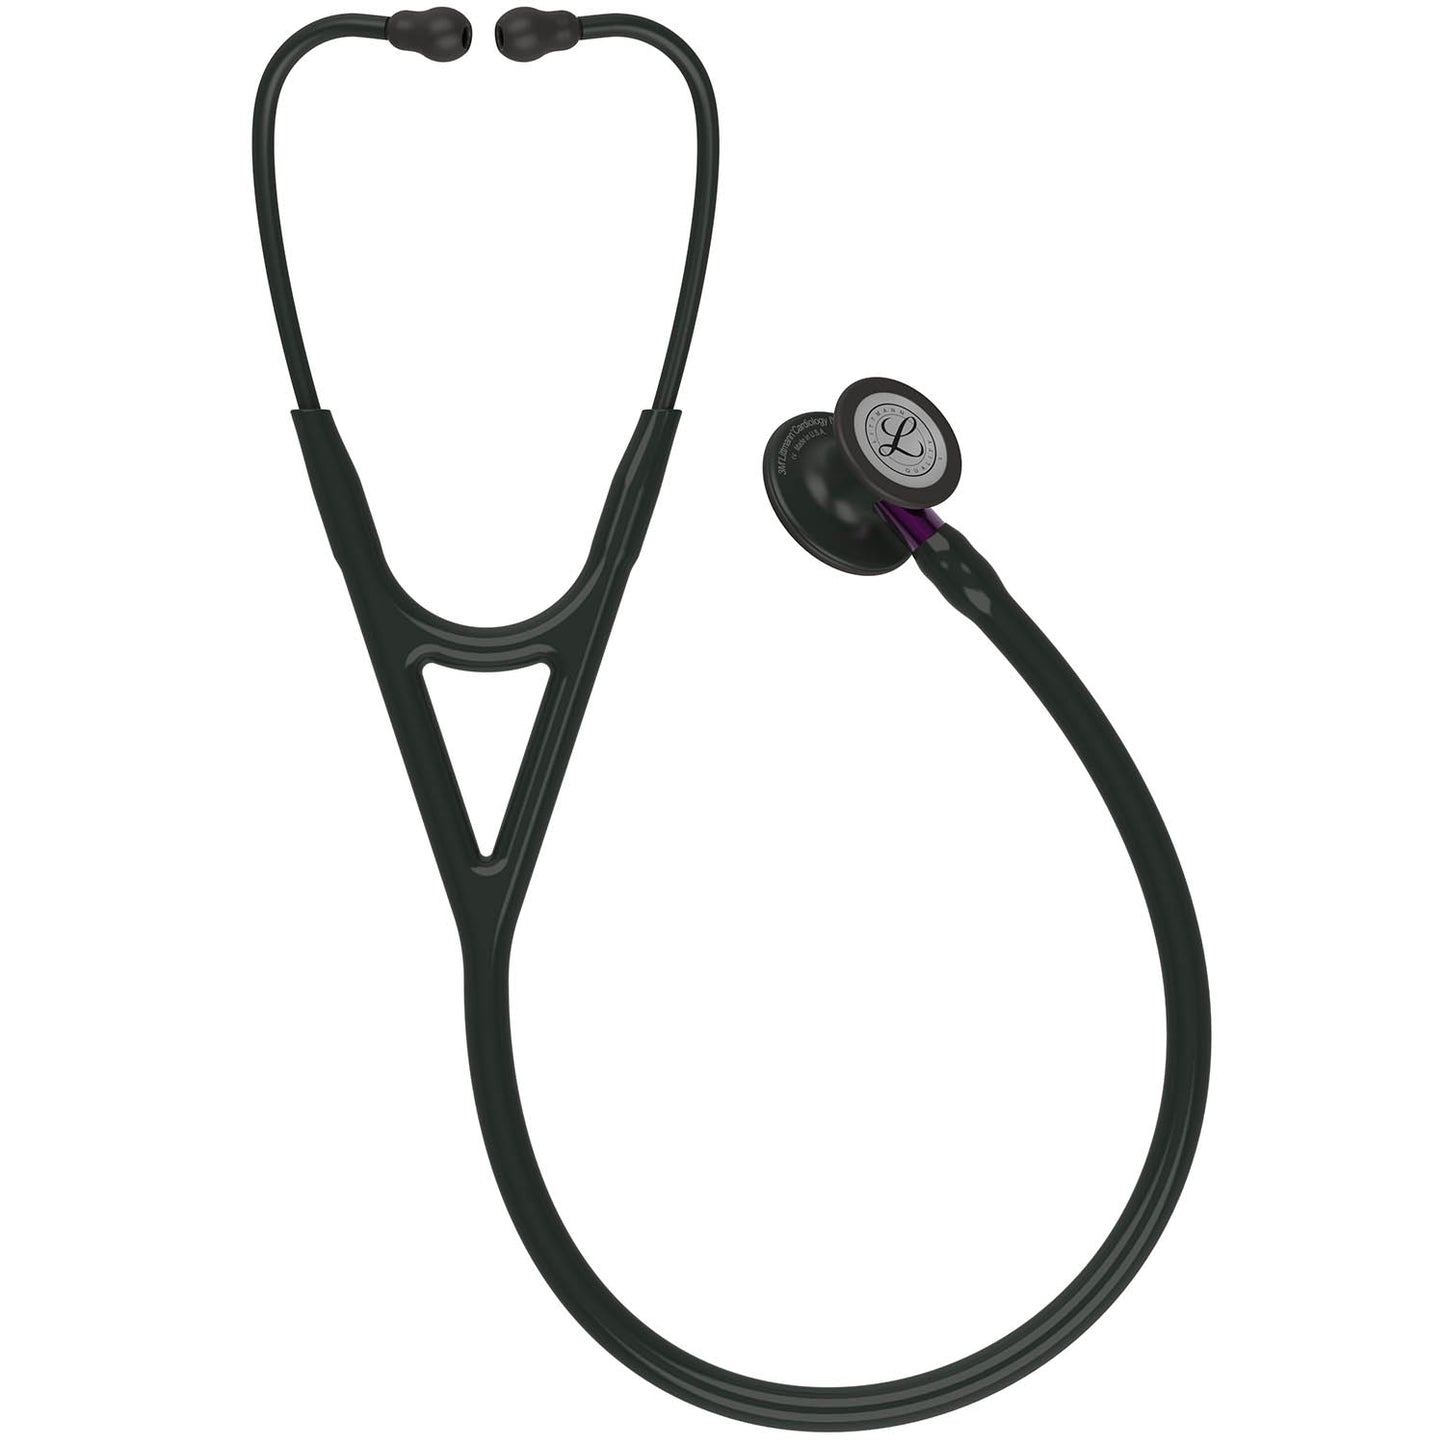 Littmann Cardiology IV Diagnostic Stethoscope: Black & Black - Violet Stem 6203 Stethoscopes 3M Littmann   